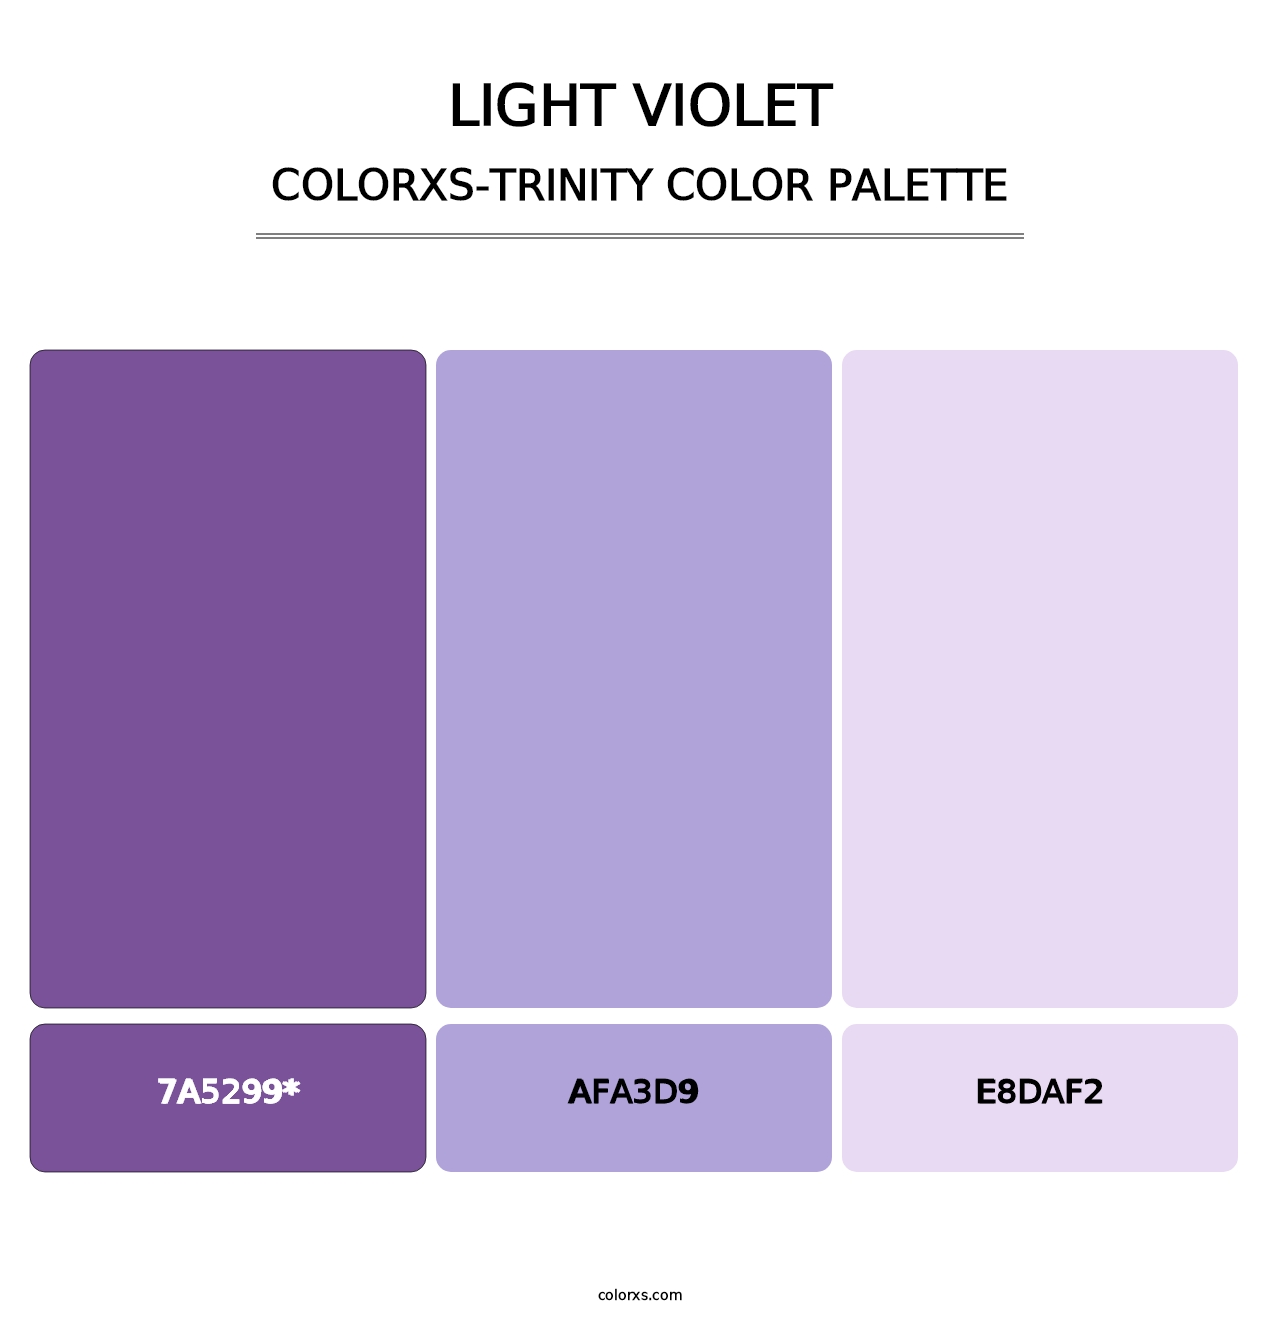 Light Violet - Colorxs Trinity Palette